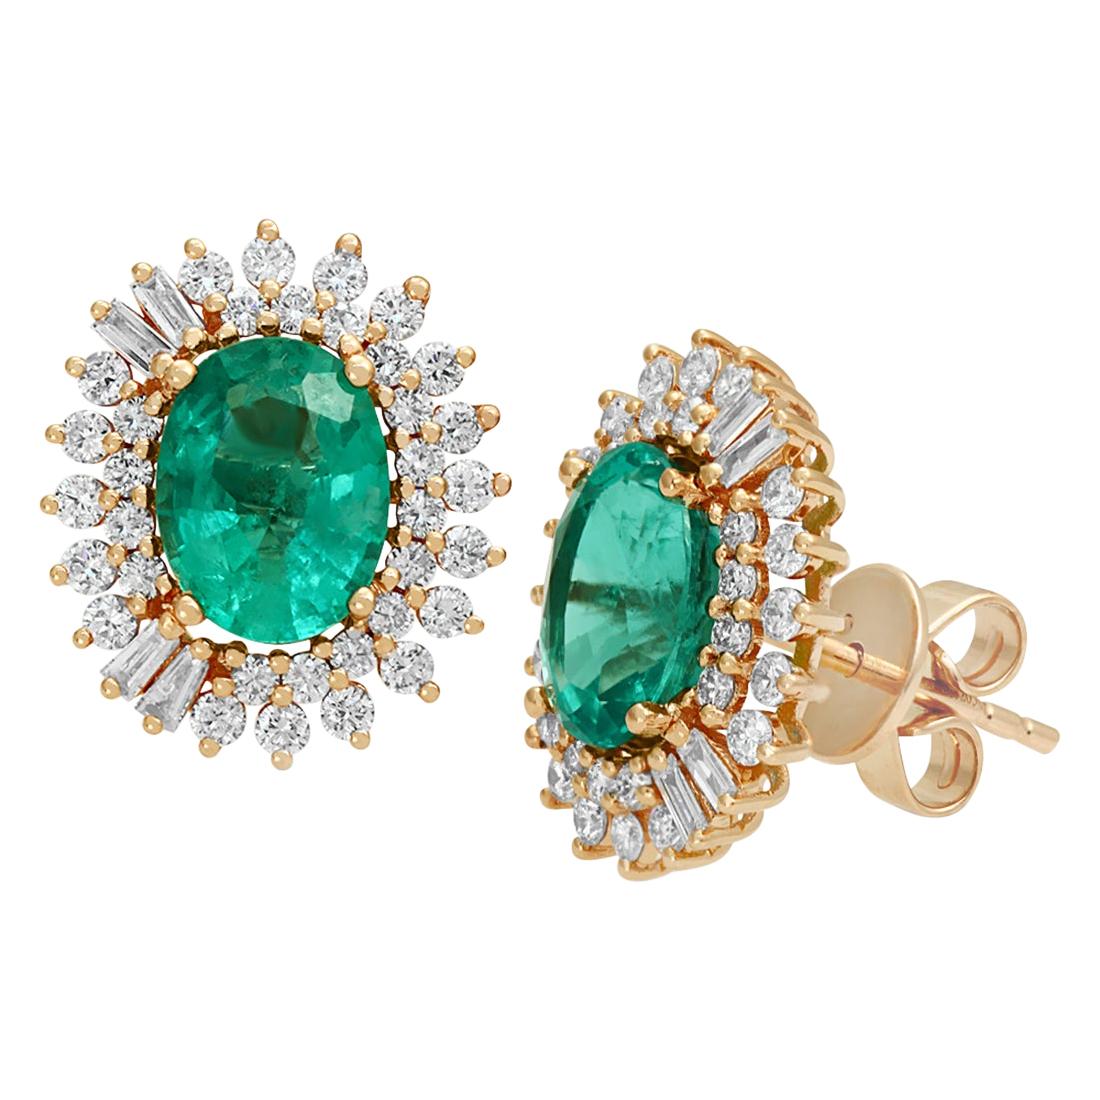 2.71 Carat Zambian Emerald and 1.69 CT Diamonds in 14K Rose Gold Stud Earrings